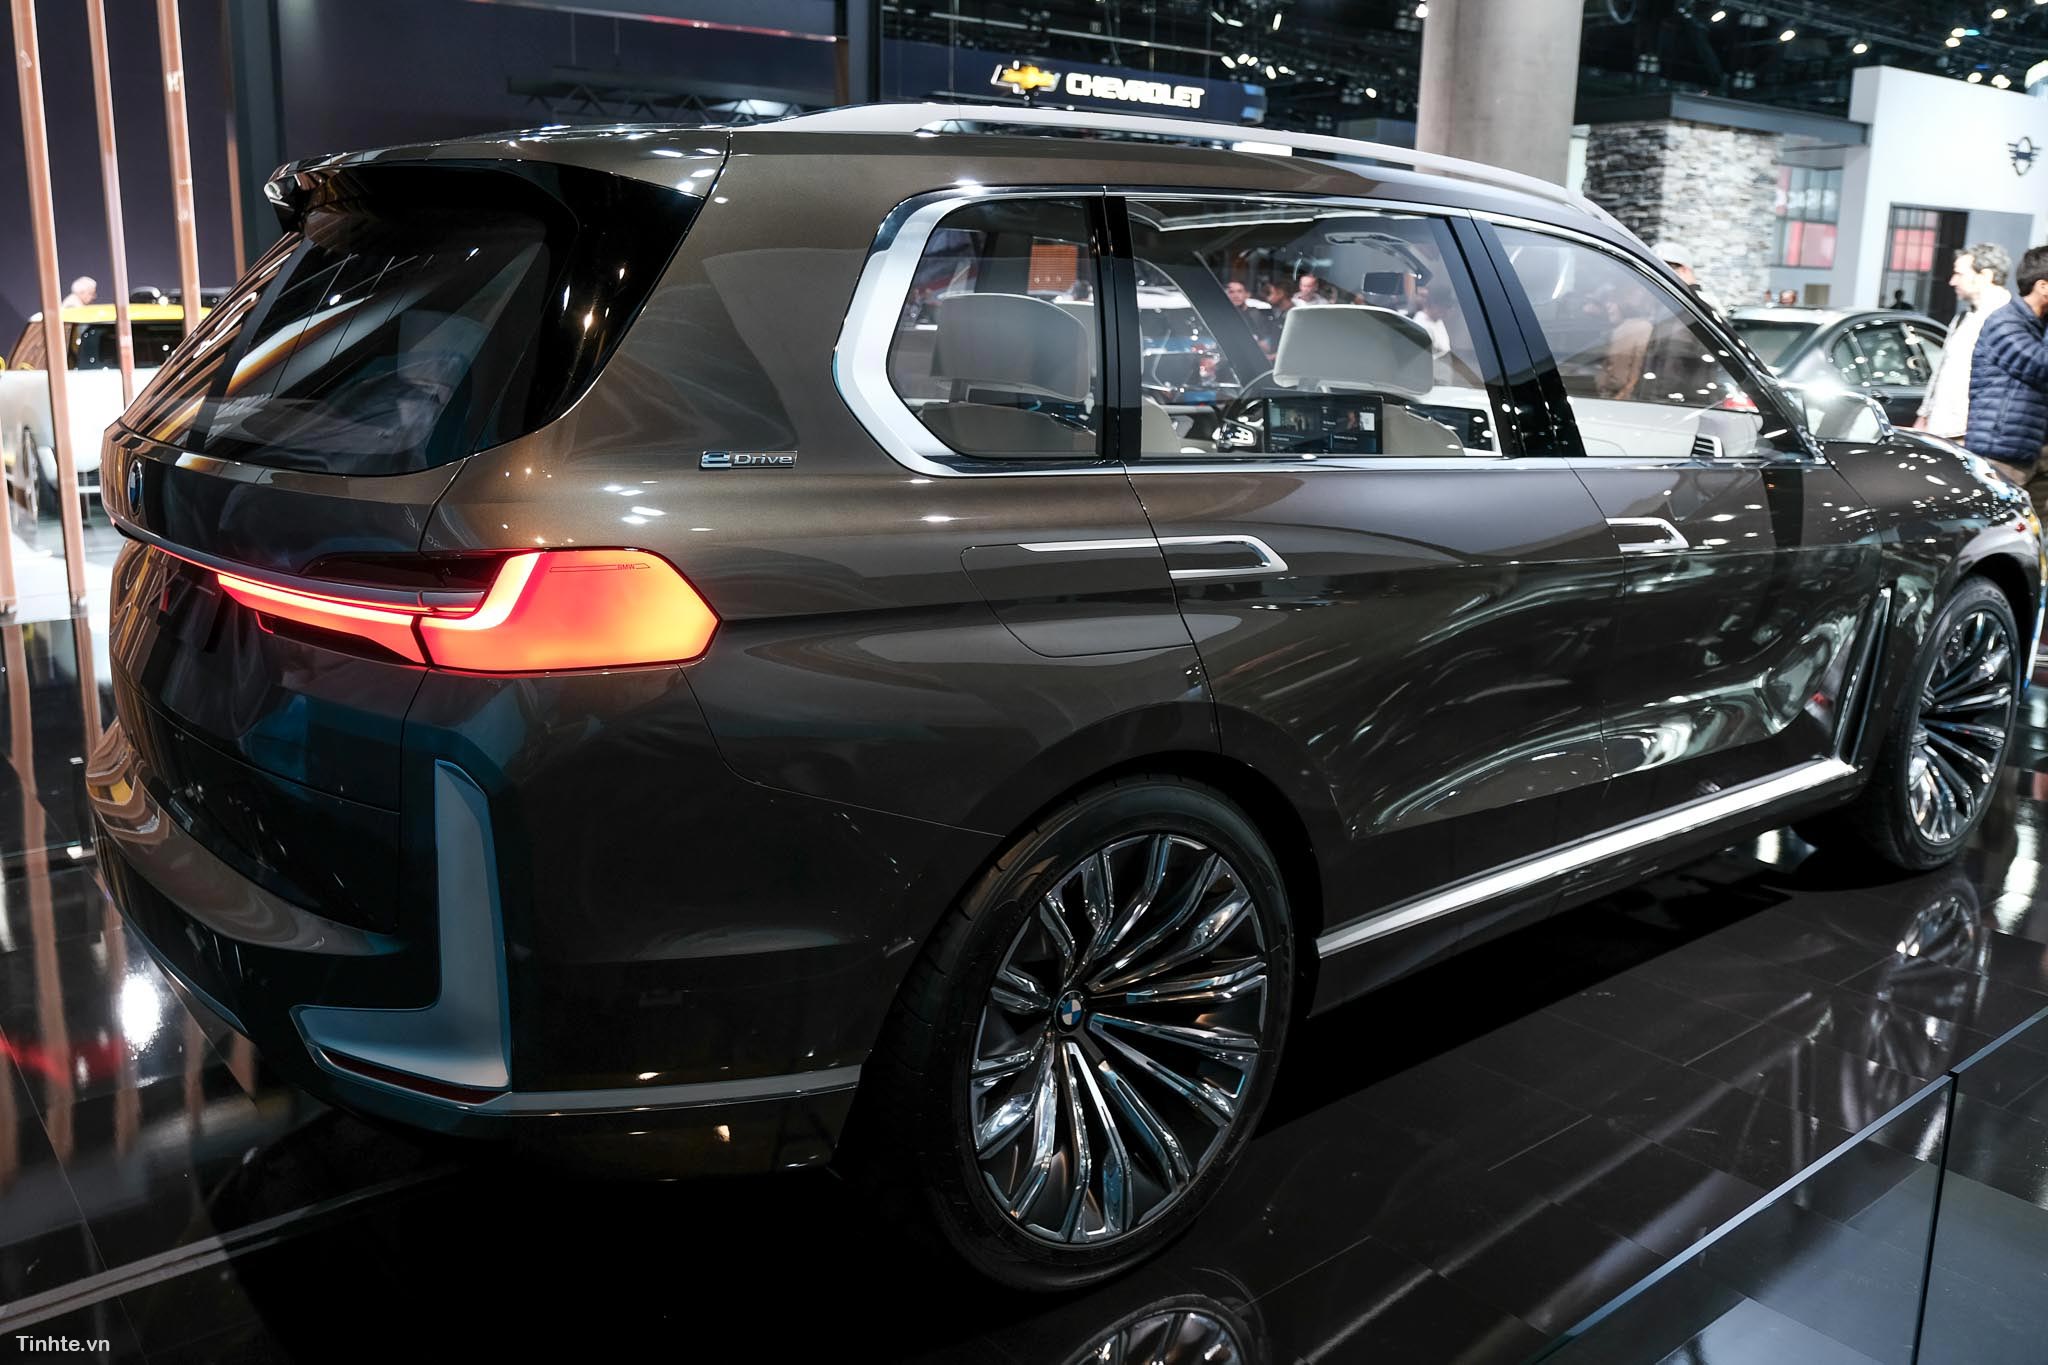 BMW_concept_X7_xe.tinhte.vn_3.jpg